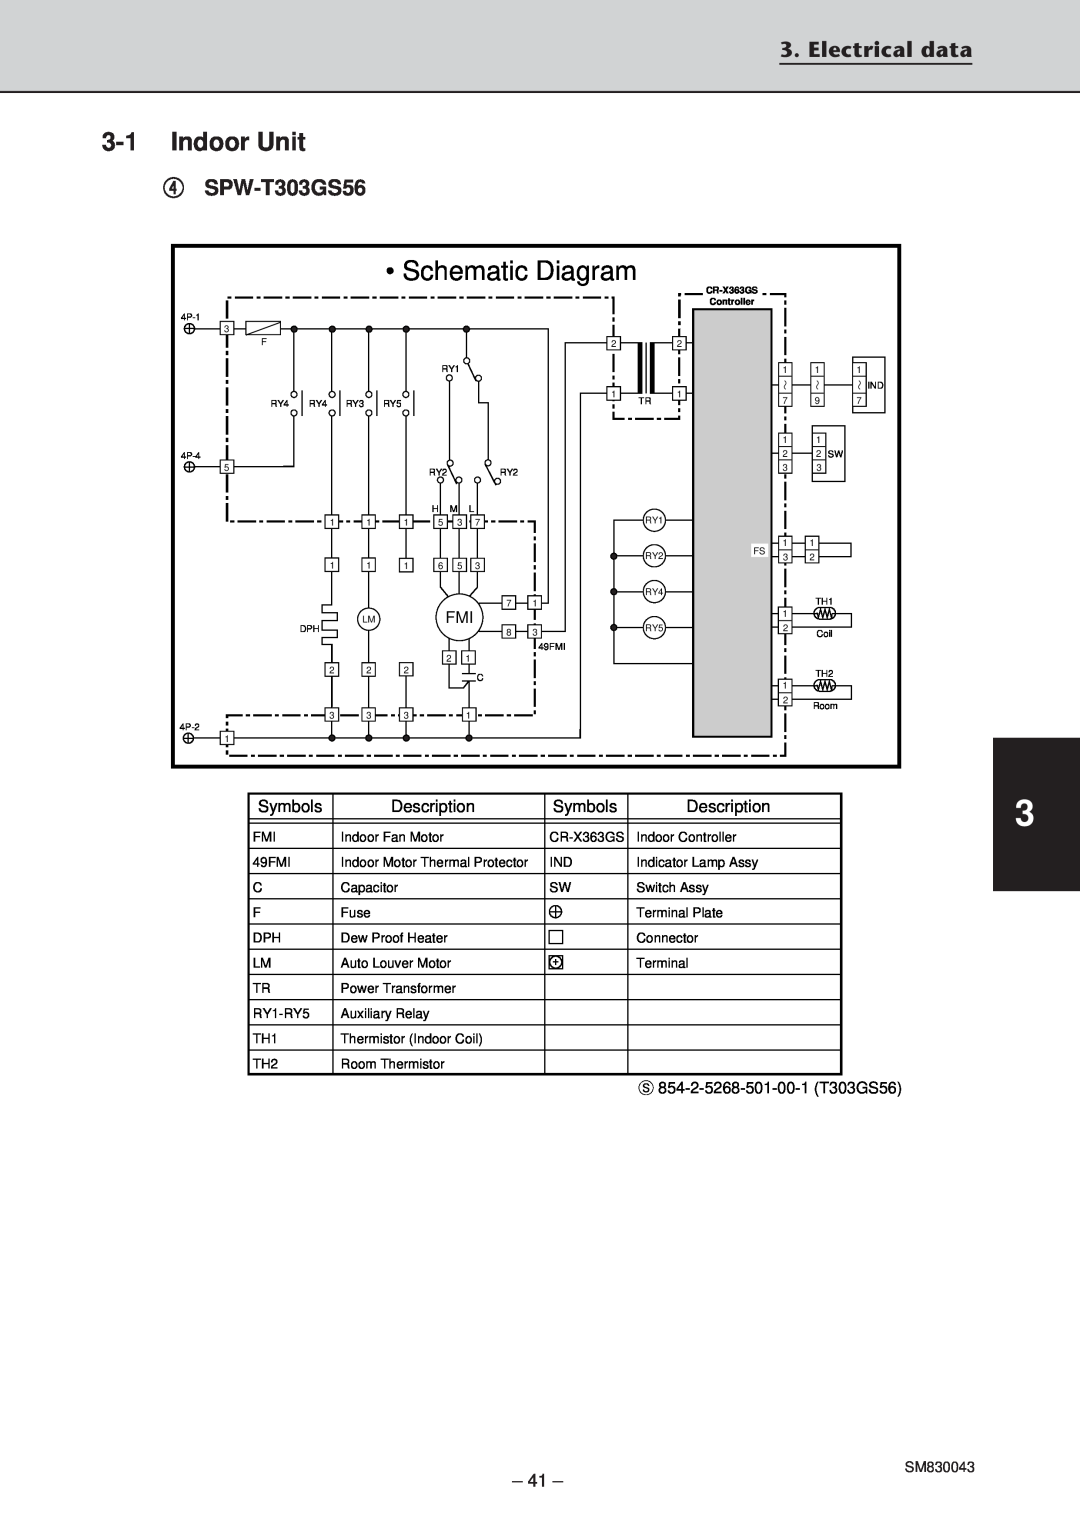 Sanyo SPW-T253G56 Schematic Diagram, 3-1Indoor Unit, Electrical data, Symbols, Description, S 854-2-5268-501-00-1T303GS56 